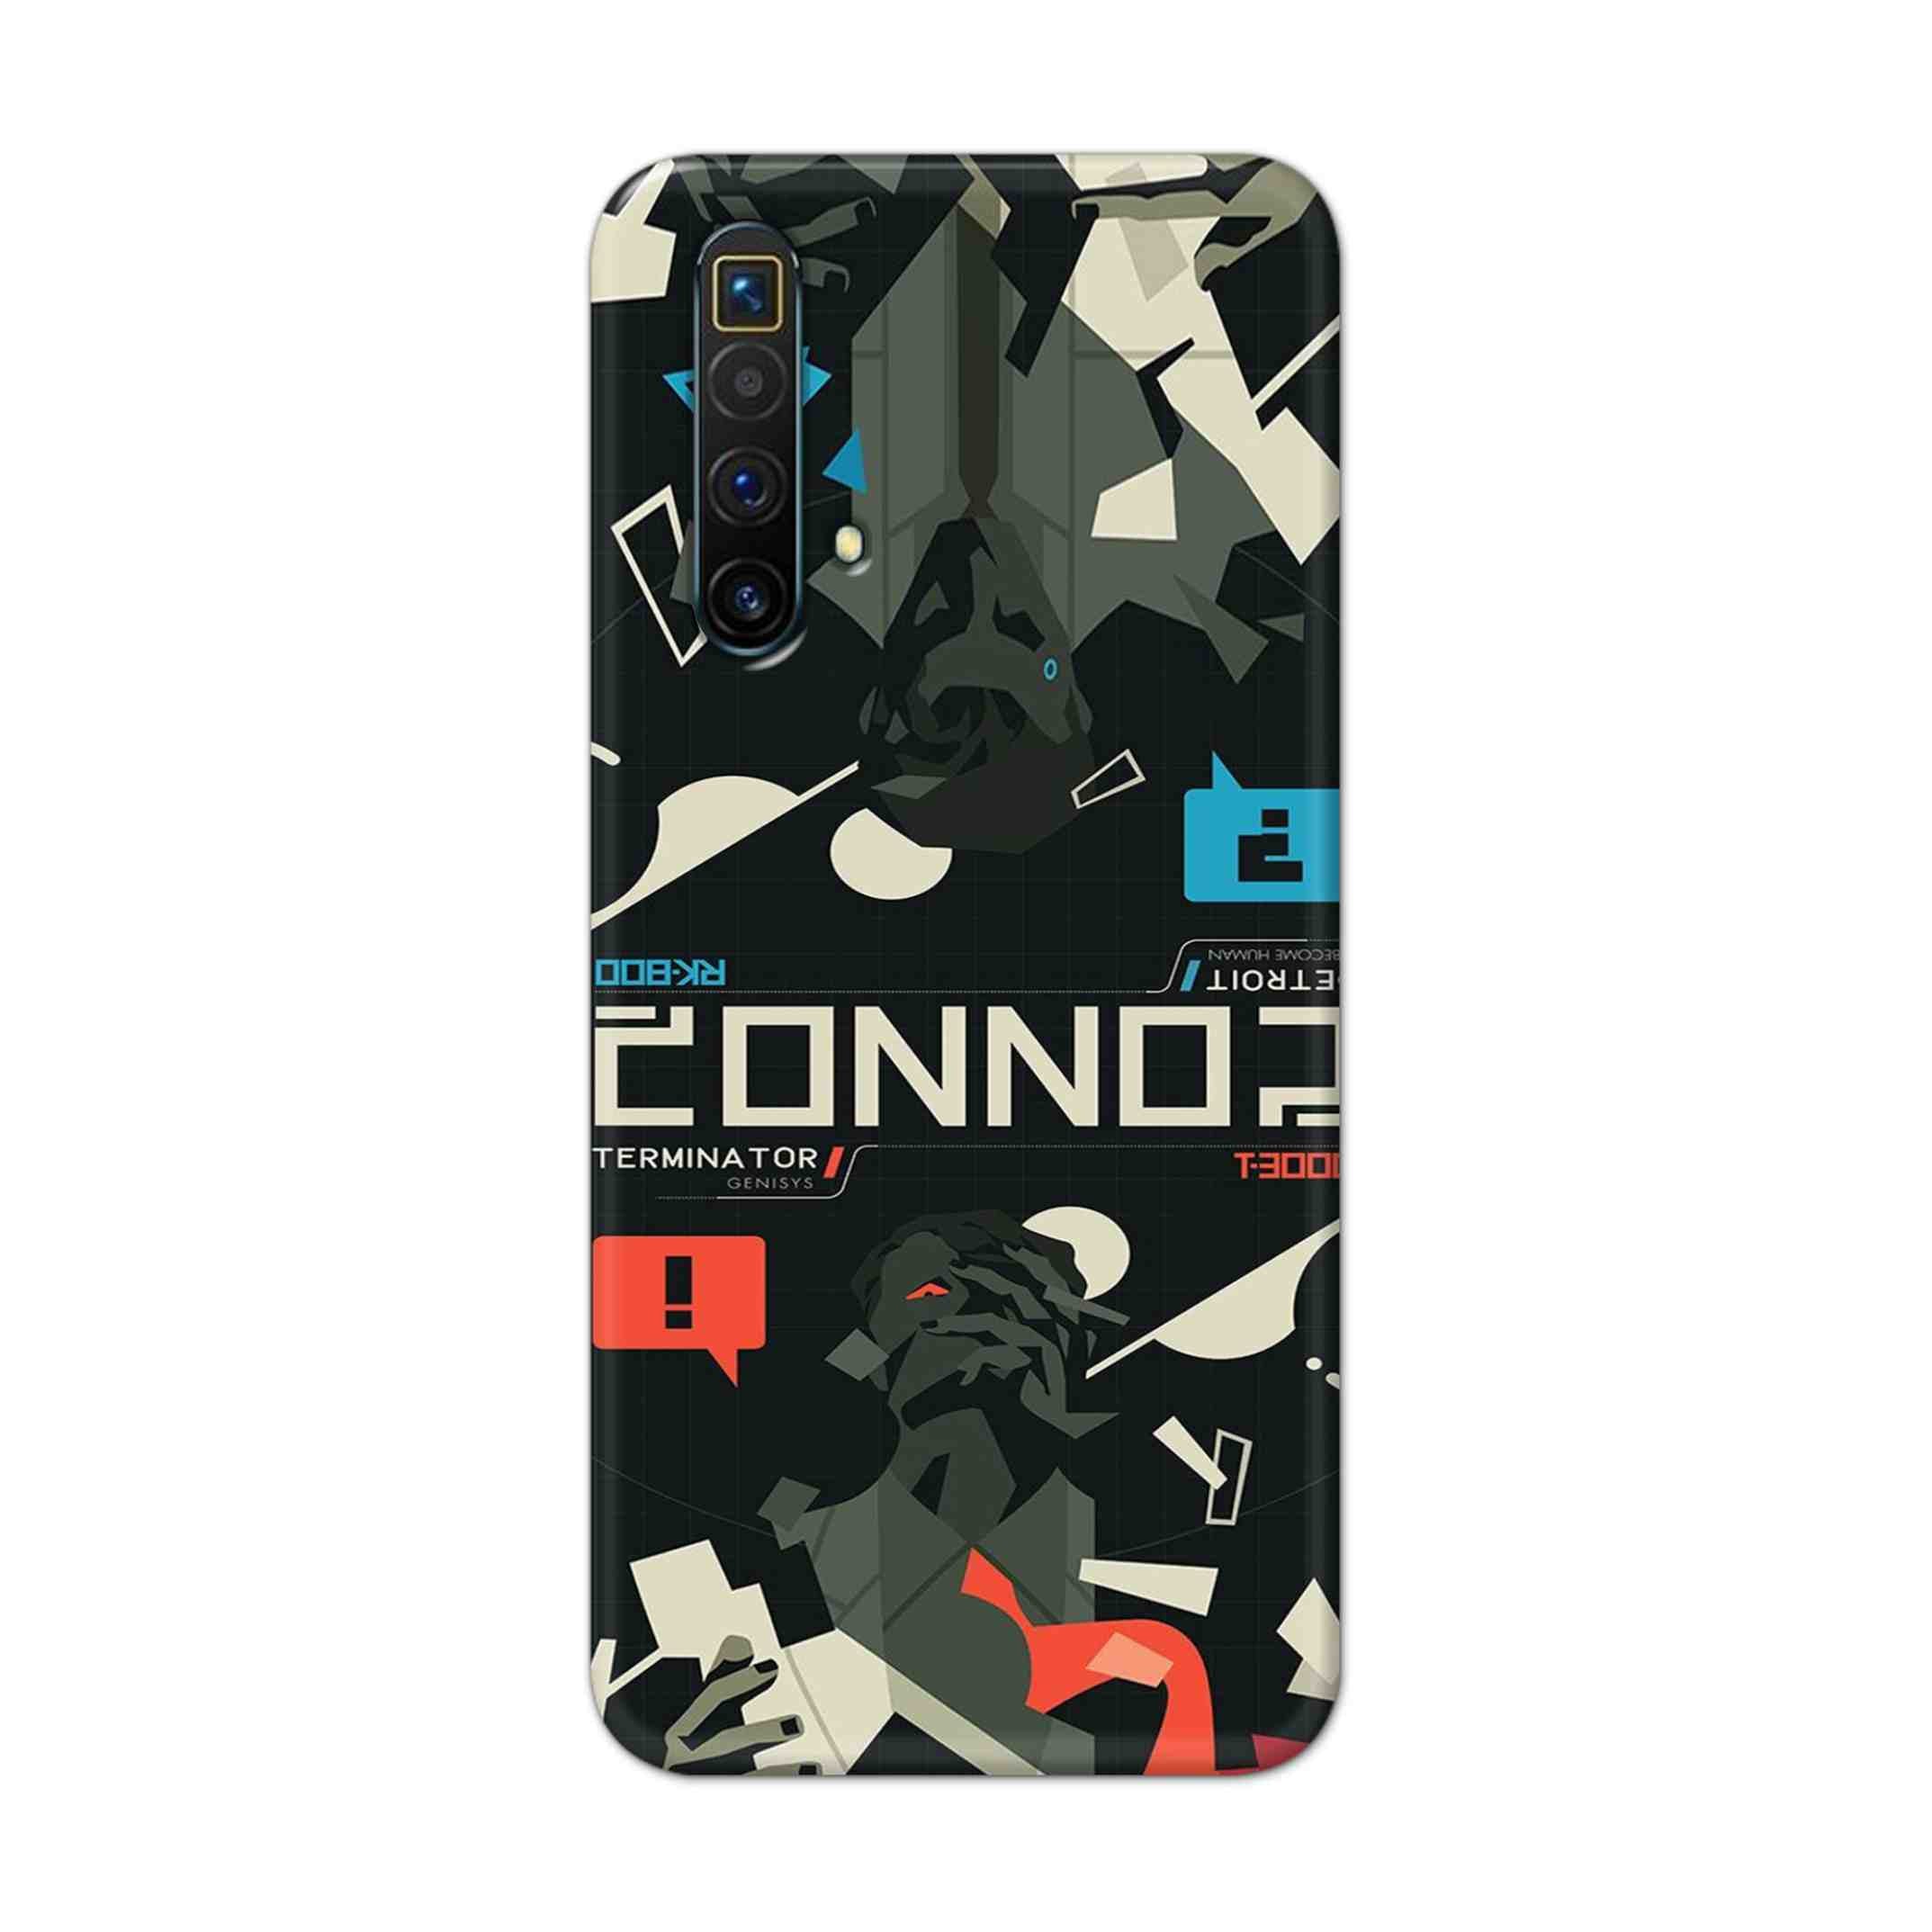 Buy Terminator Hard Back Mobile Phone Case Cover For Oppo Realme X3 Online